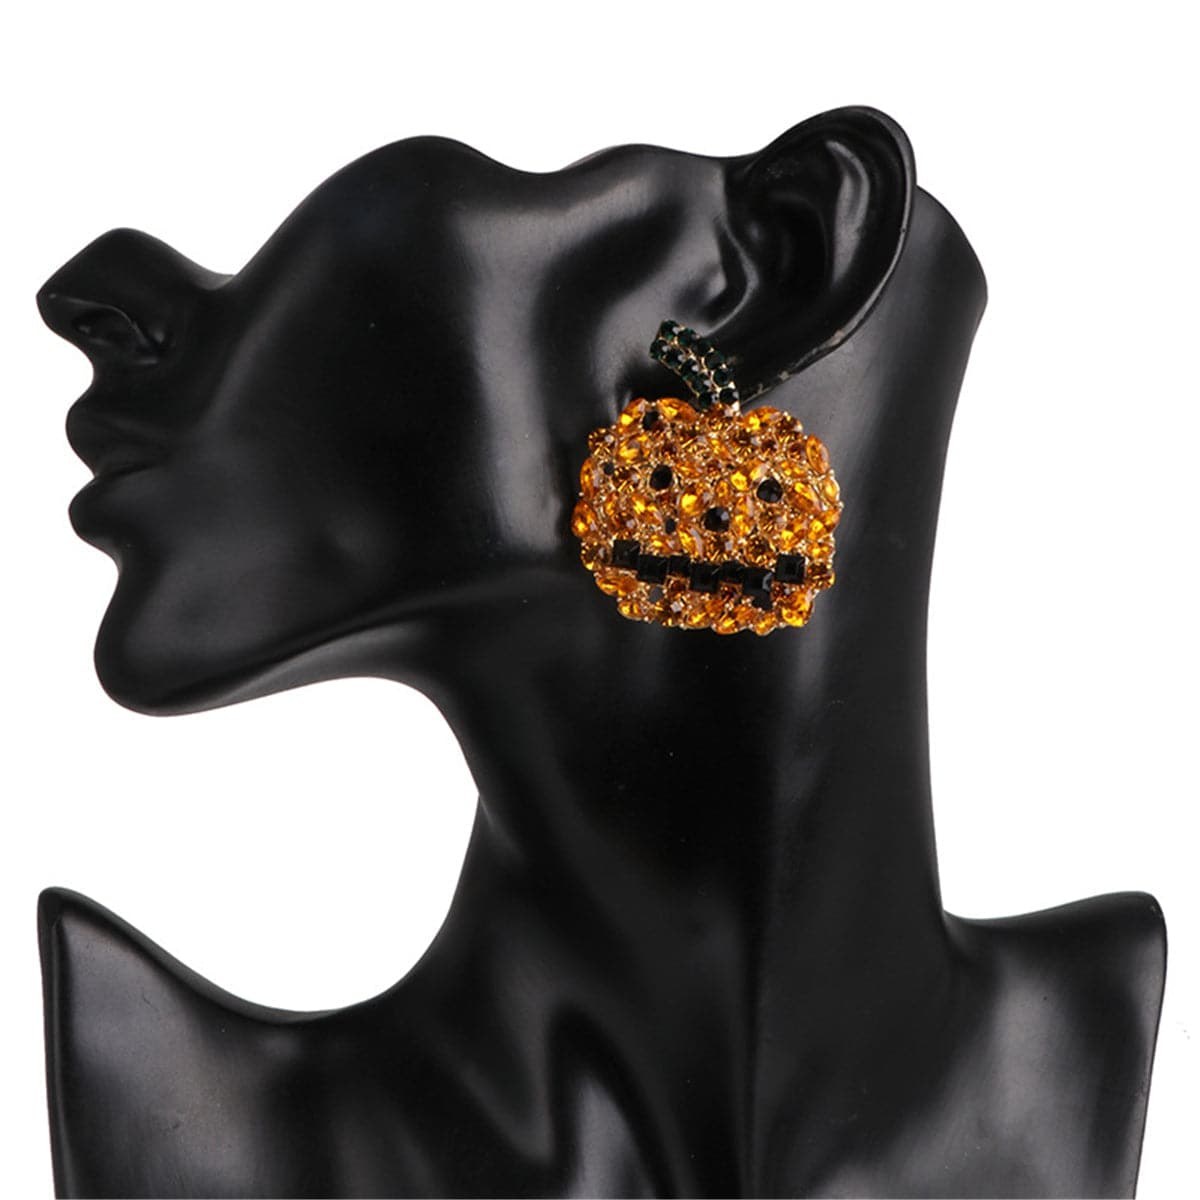 Yellow Crystal & Cubic Zirconia Pumpkin Stud Earrings